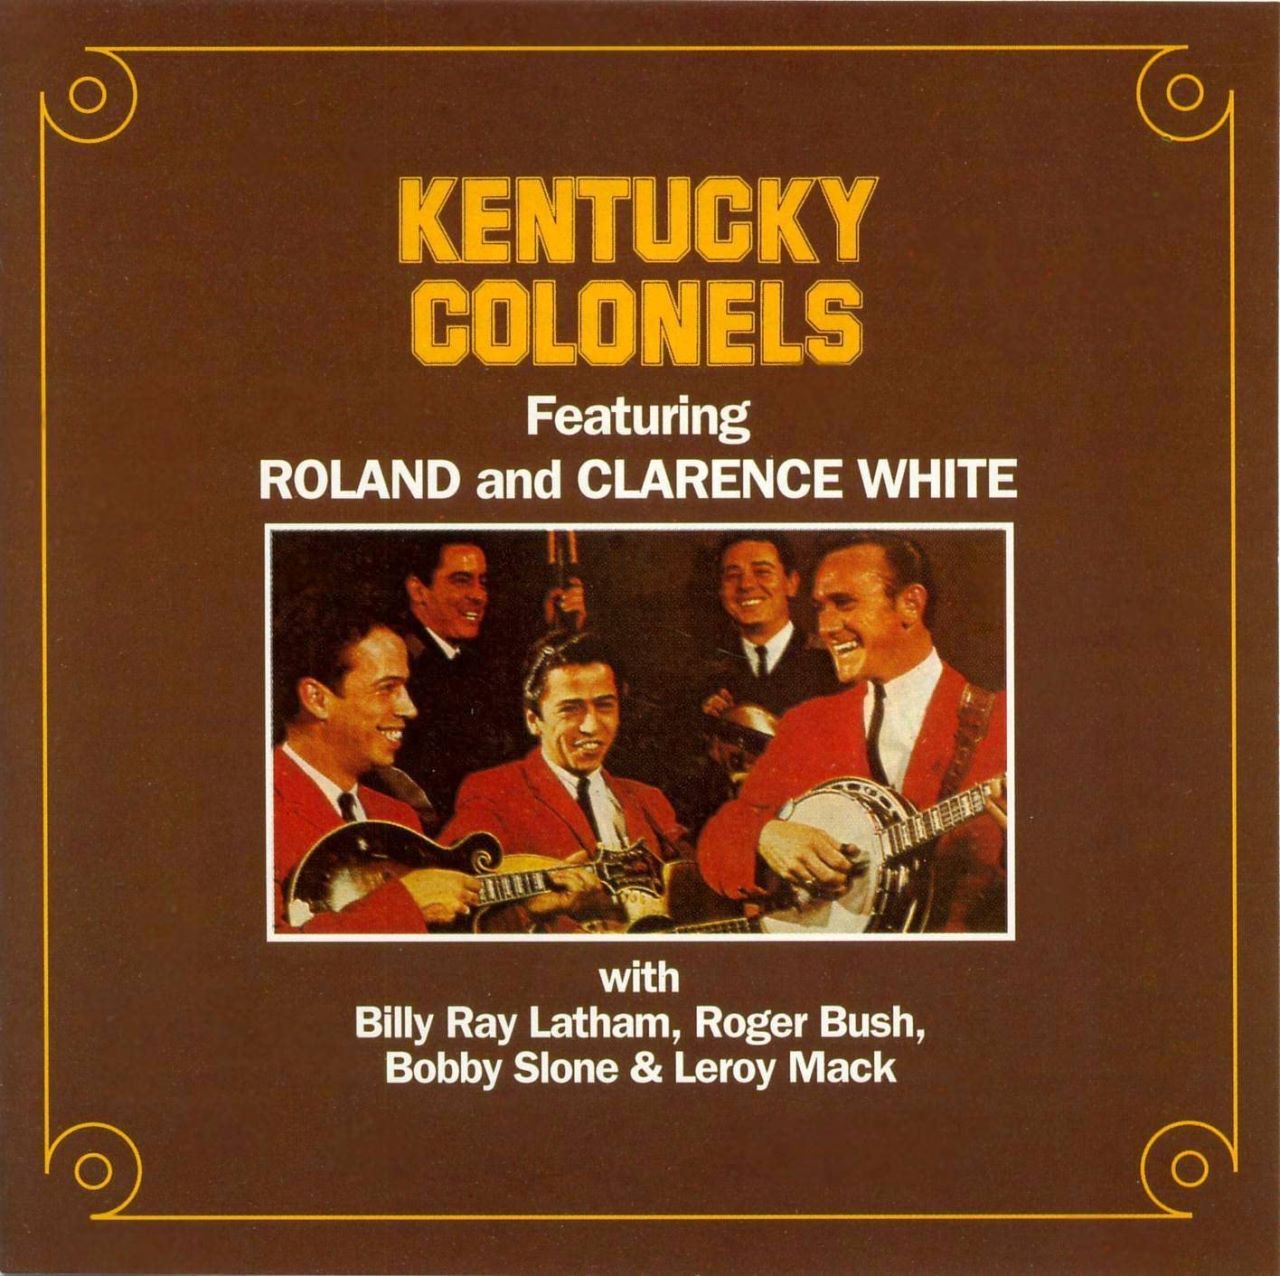 Kentucky Colonels – Kentucky Colonels cover album